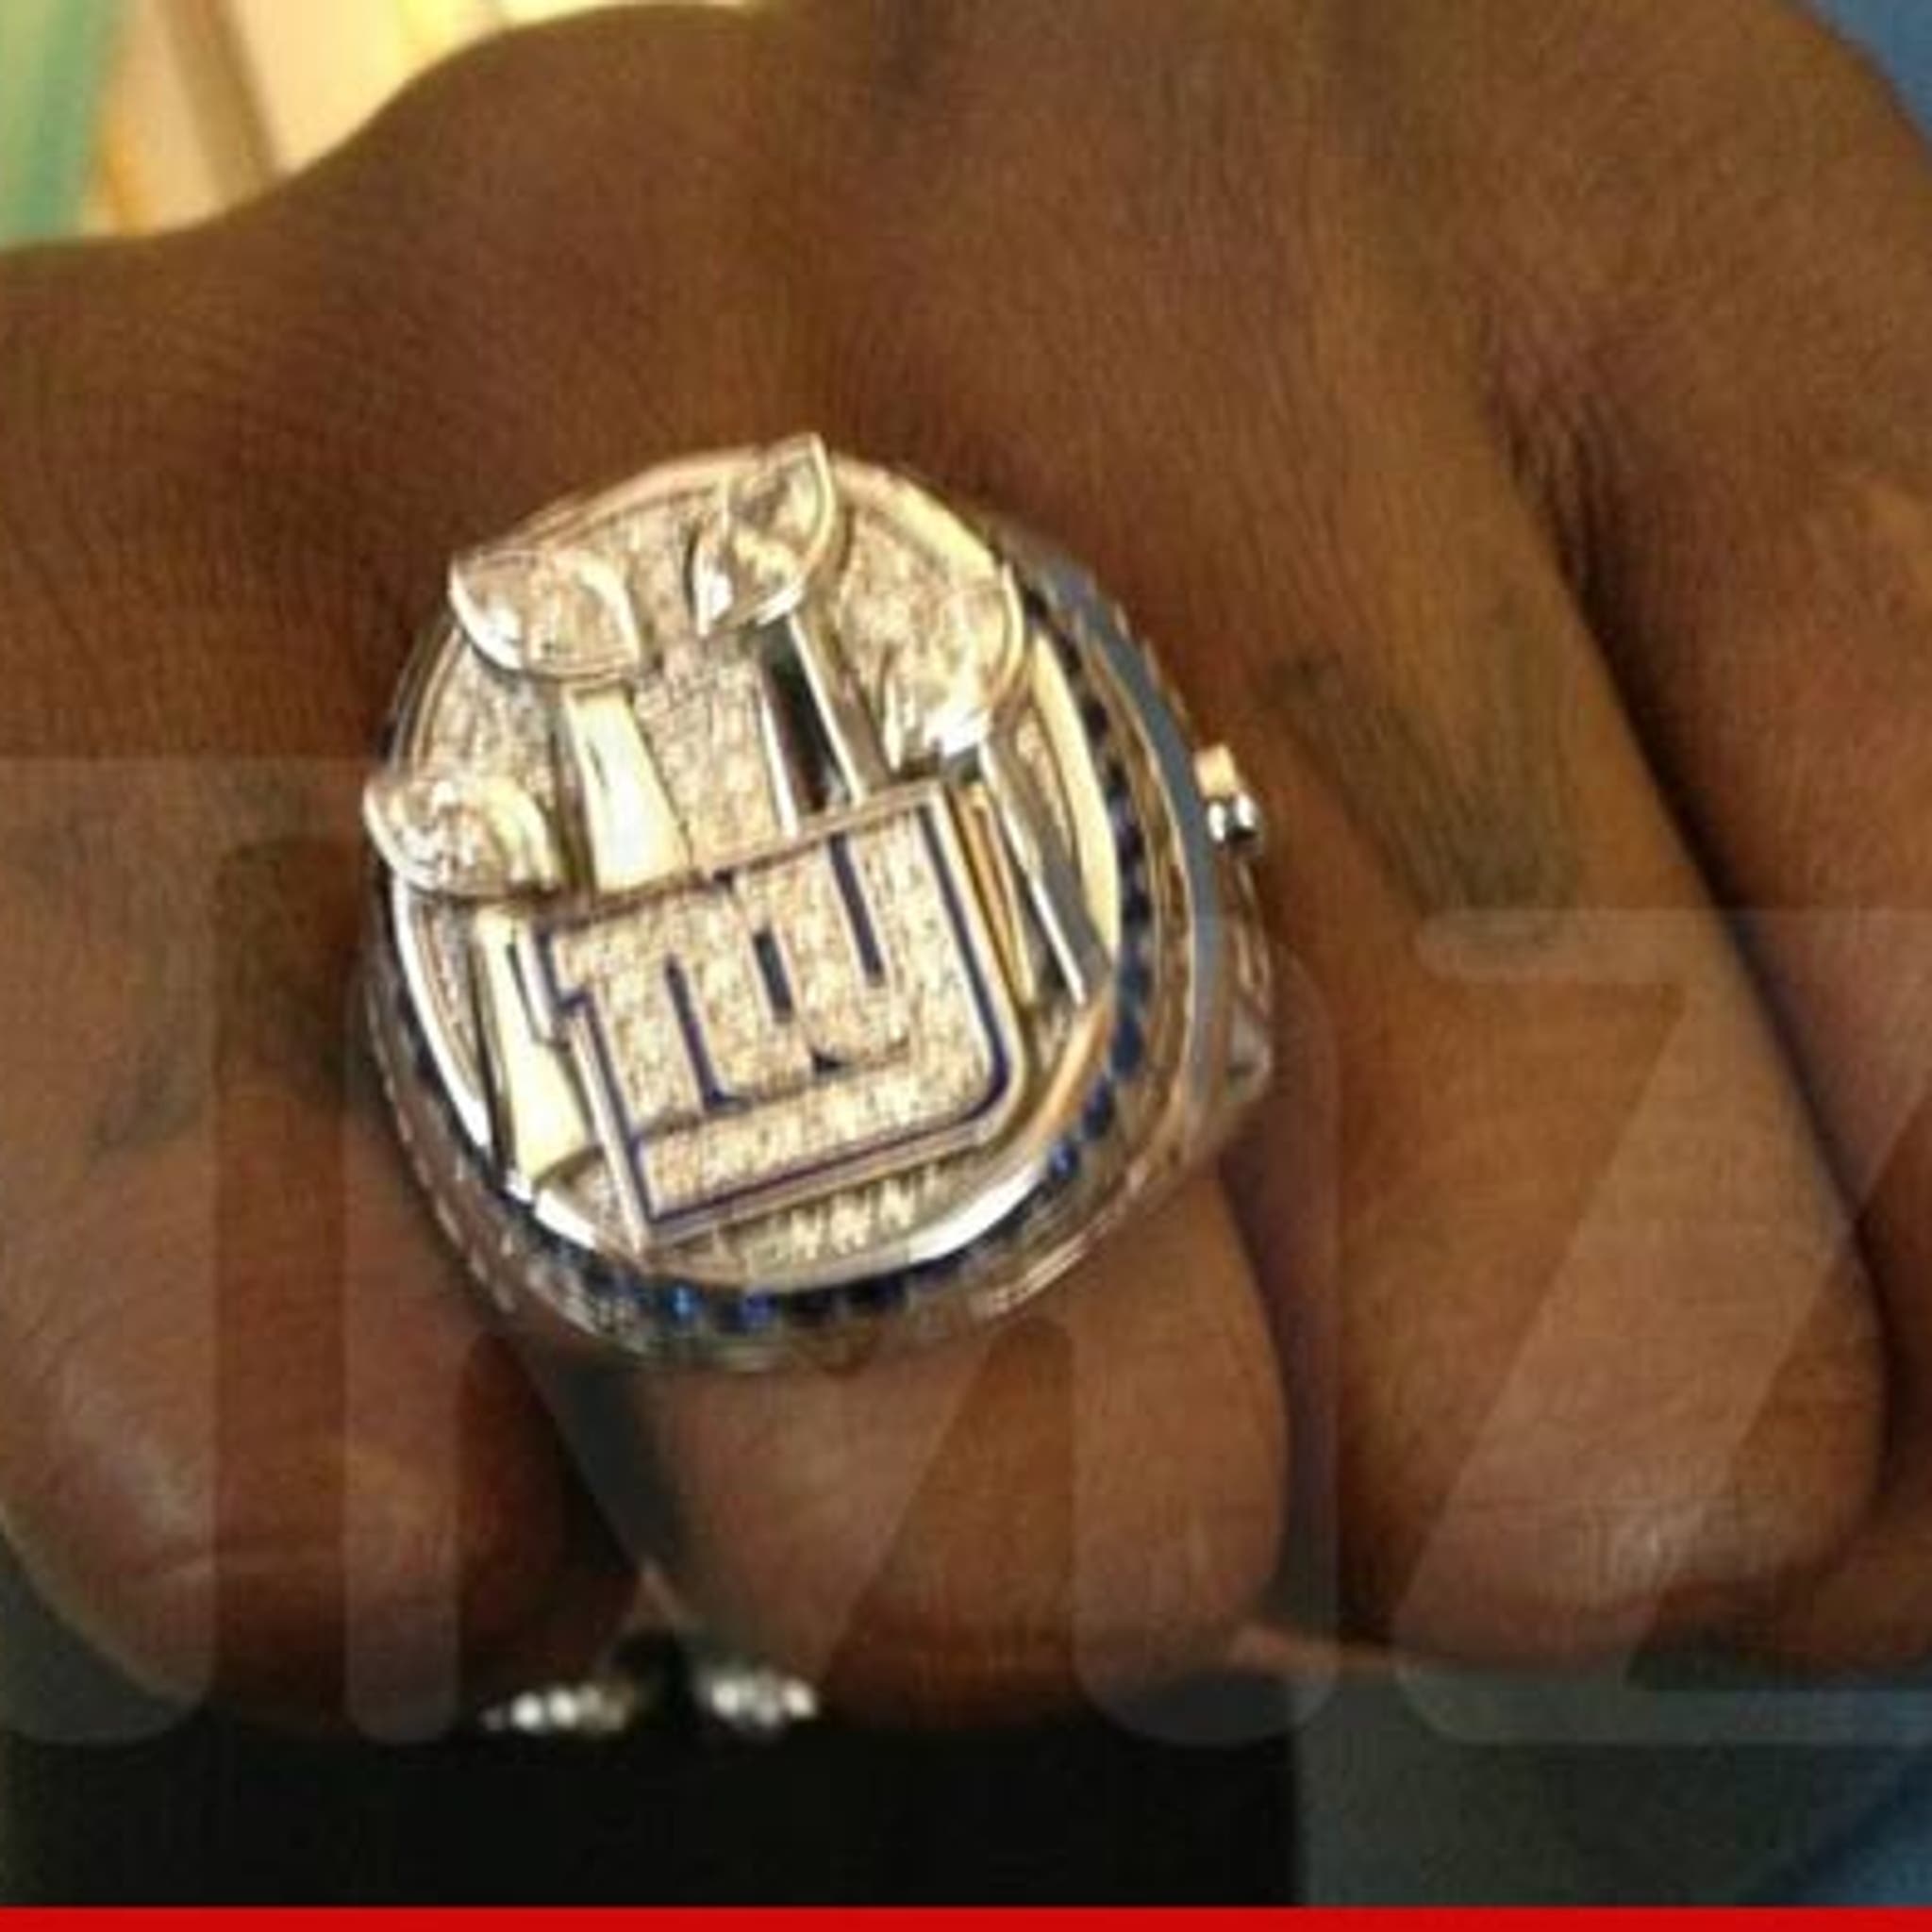 NY Giants -- We Got a Super Bowl Ring!!! [PHOTO]